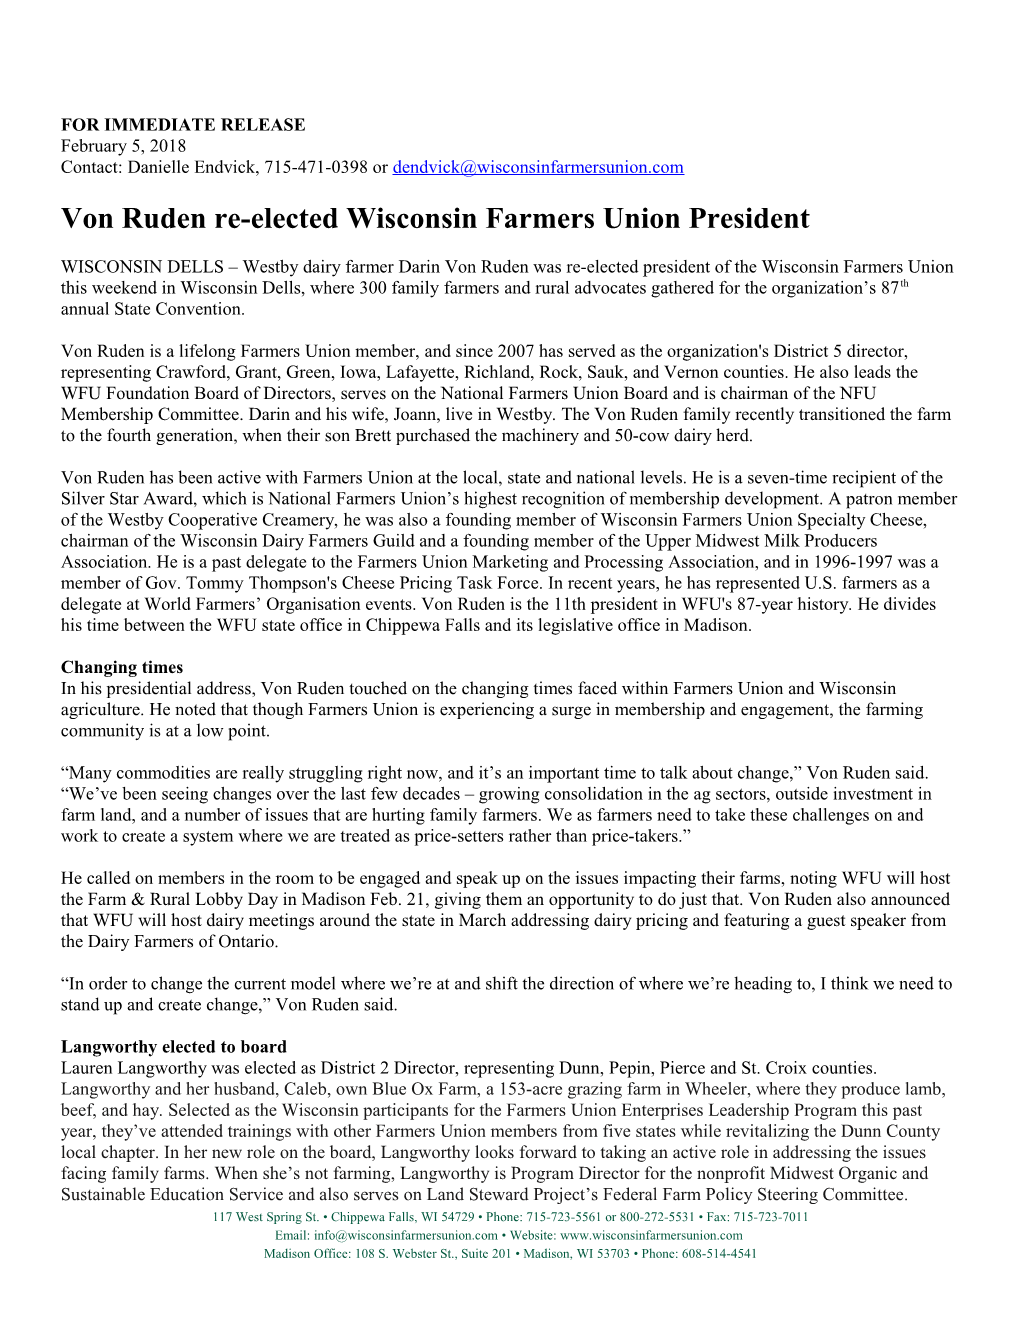 Von Ruden Re-Elected Wisconsin Farmers Union President